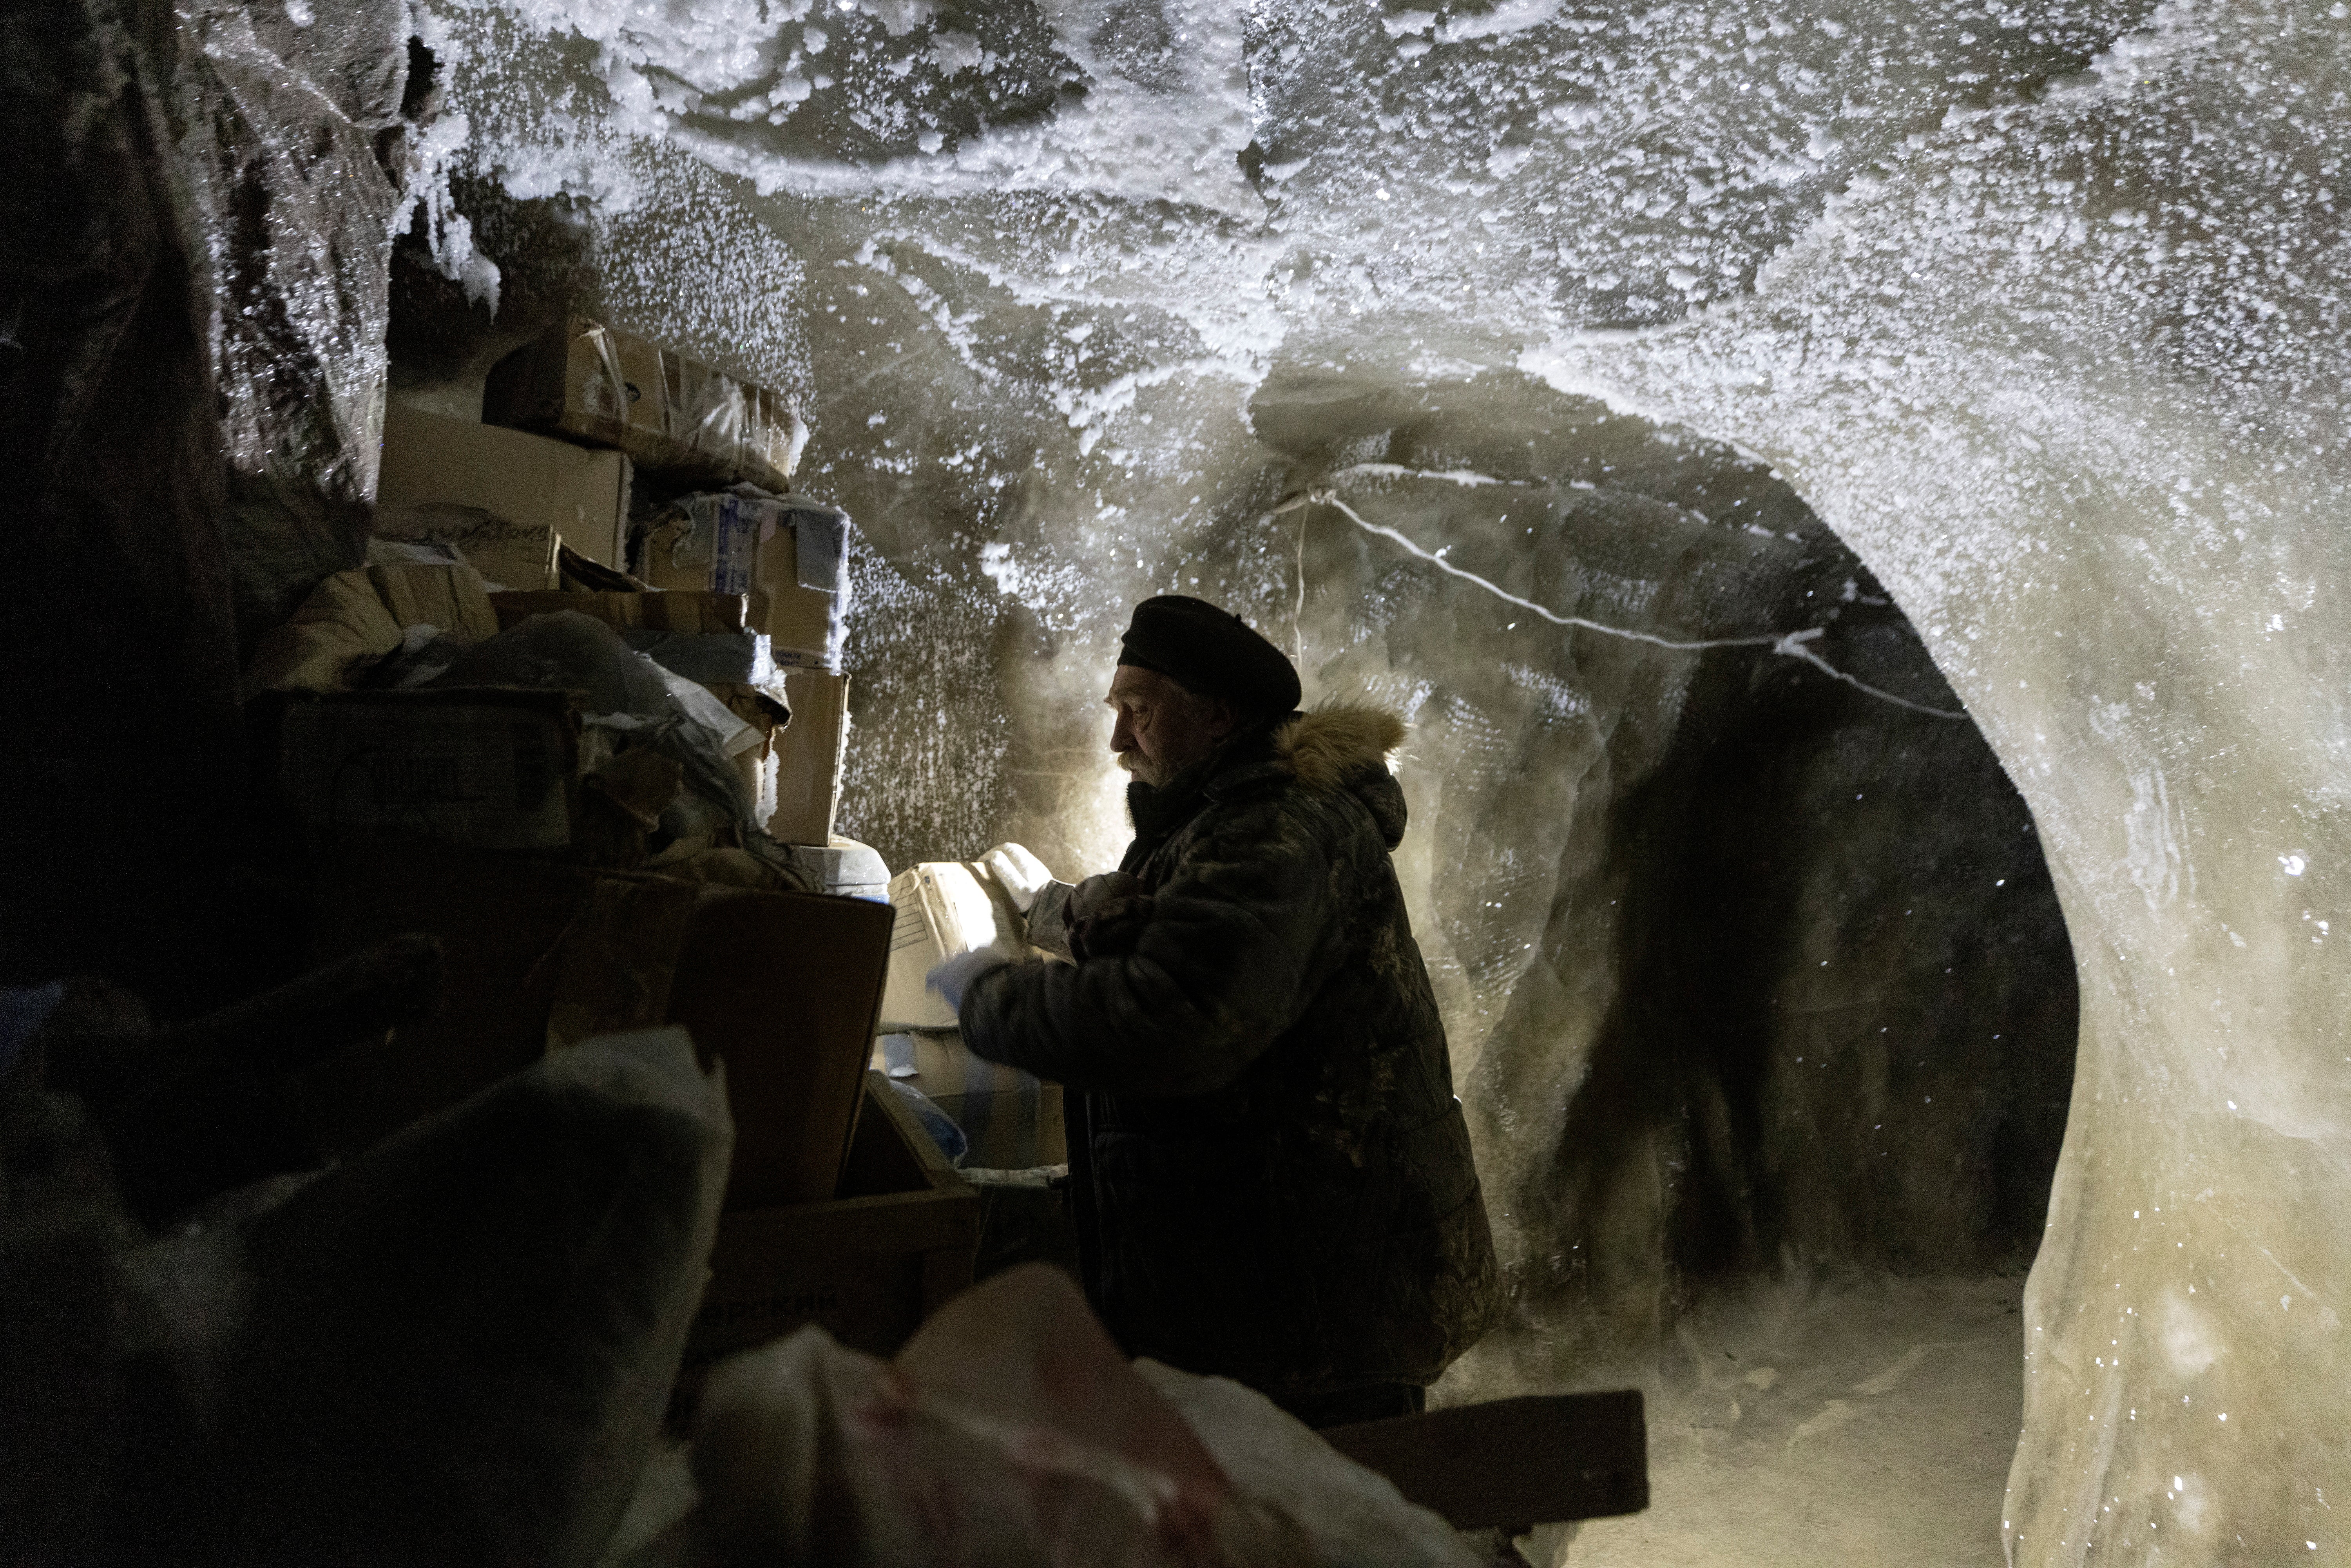 Sergey checks materials stored underground in the permafrost